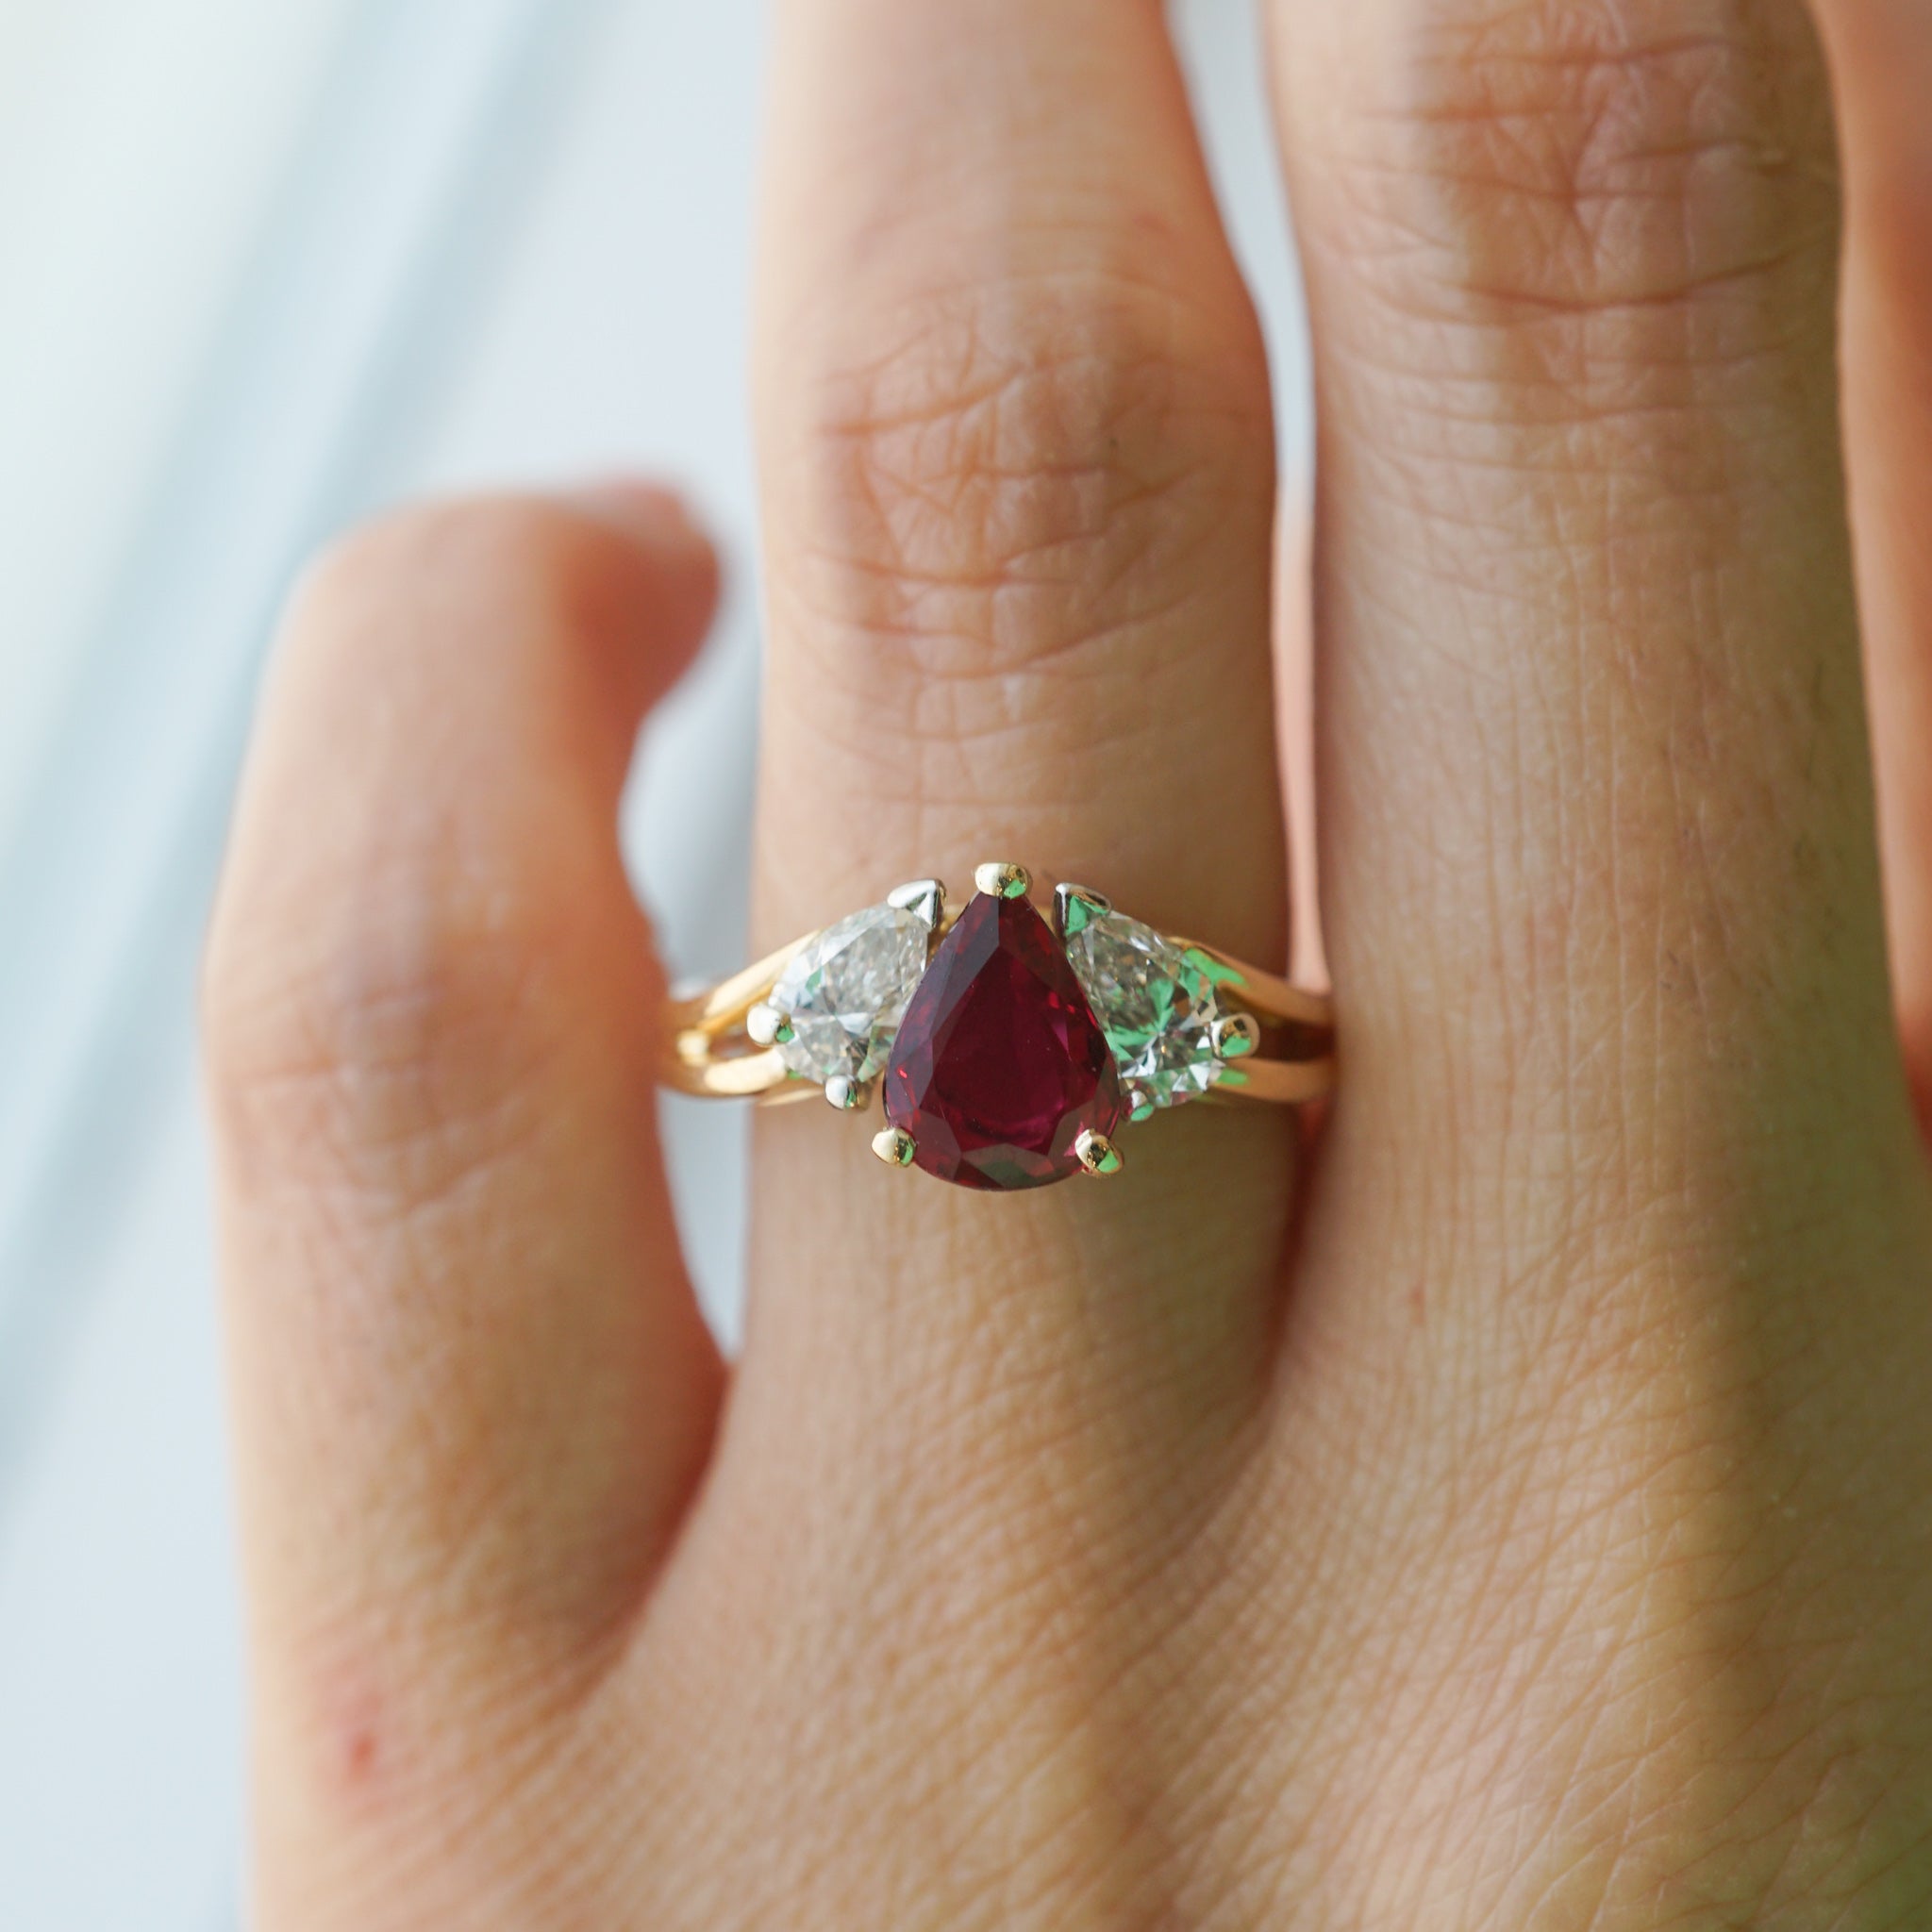 Exquisite Ruby Rings | Handcrafted Designs | NaturalGemsAtelier